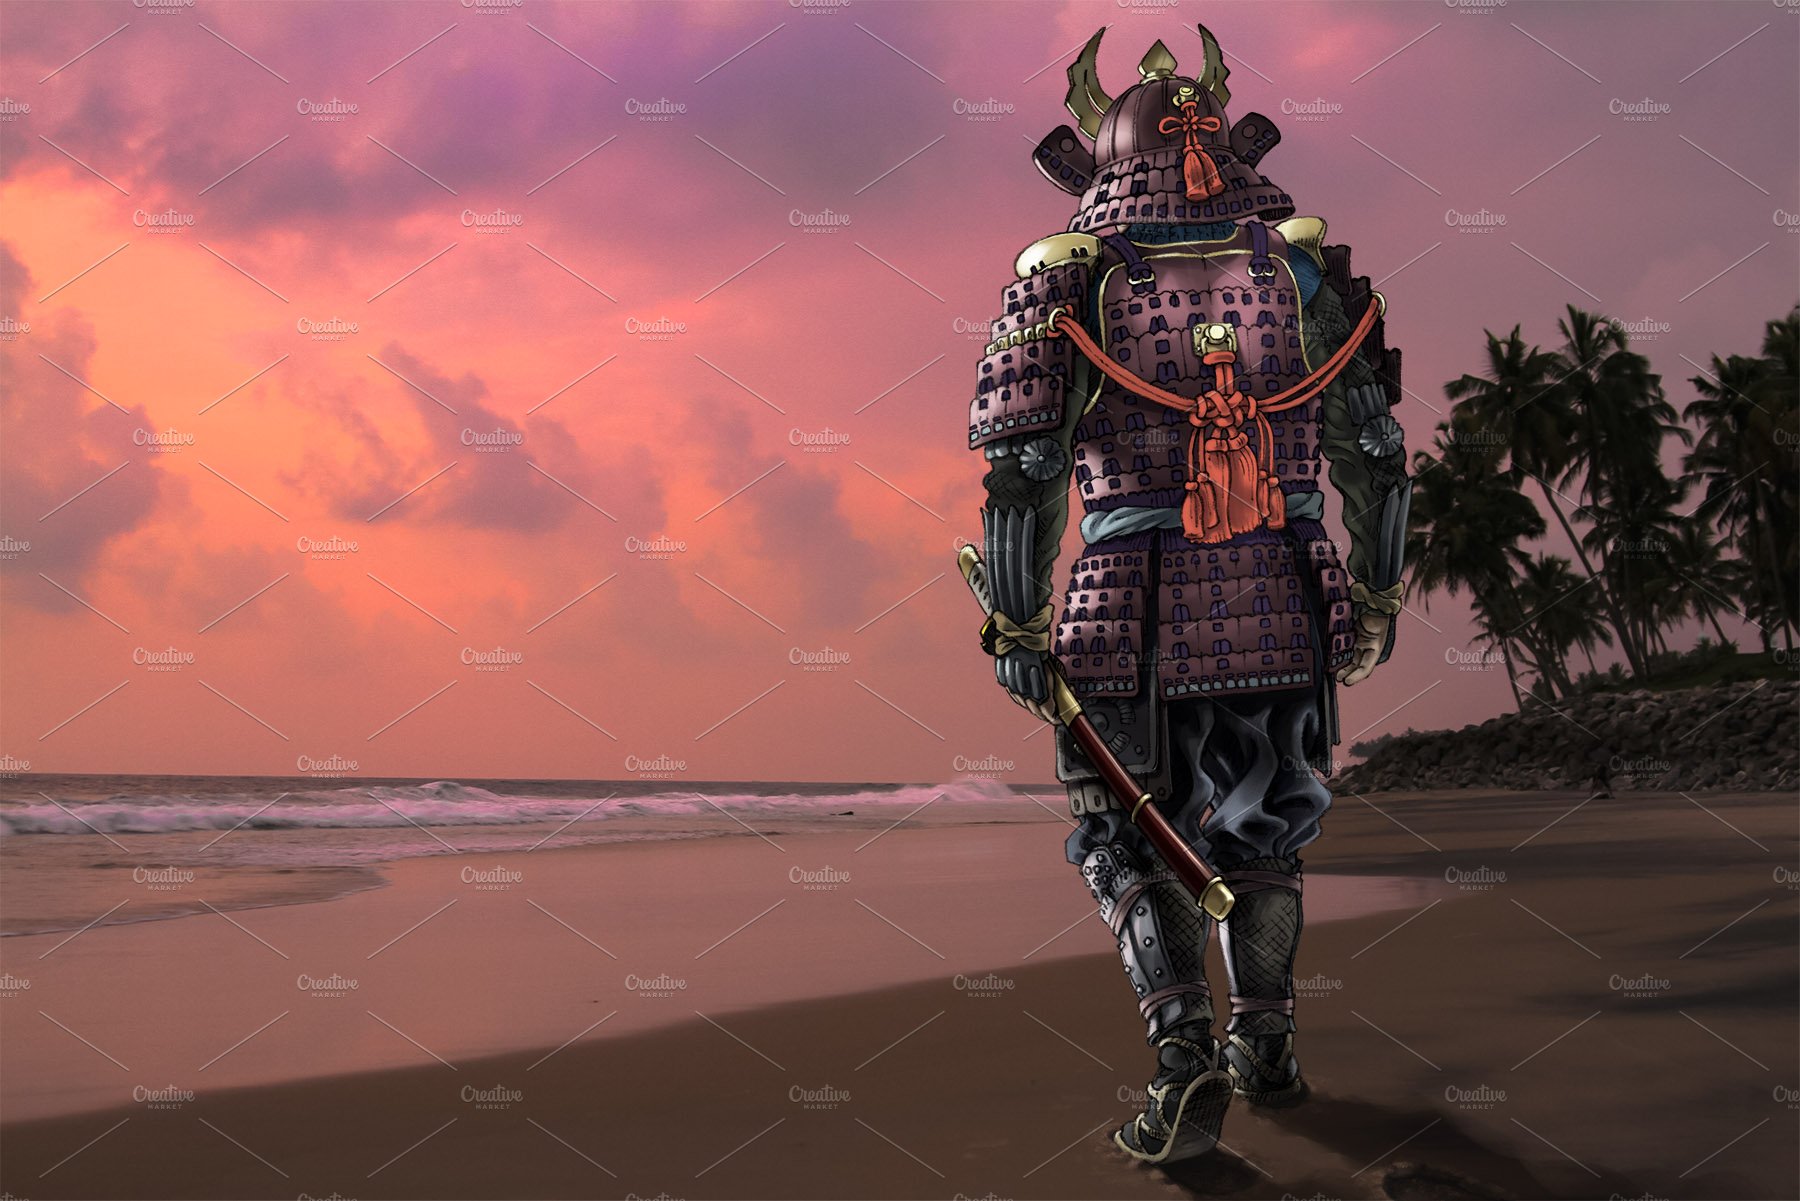 Samurai Wearing Traditional Armor cover image.